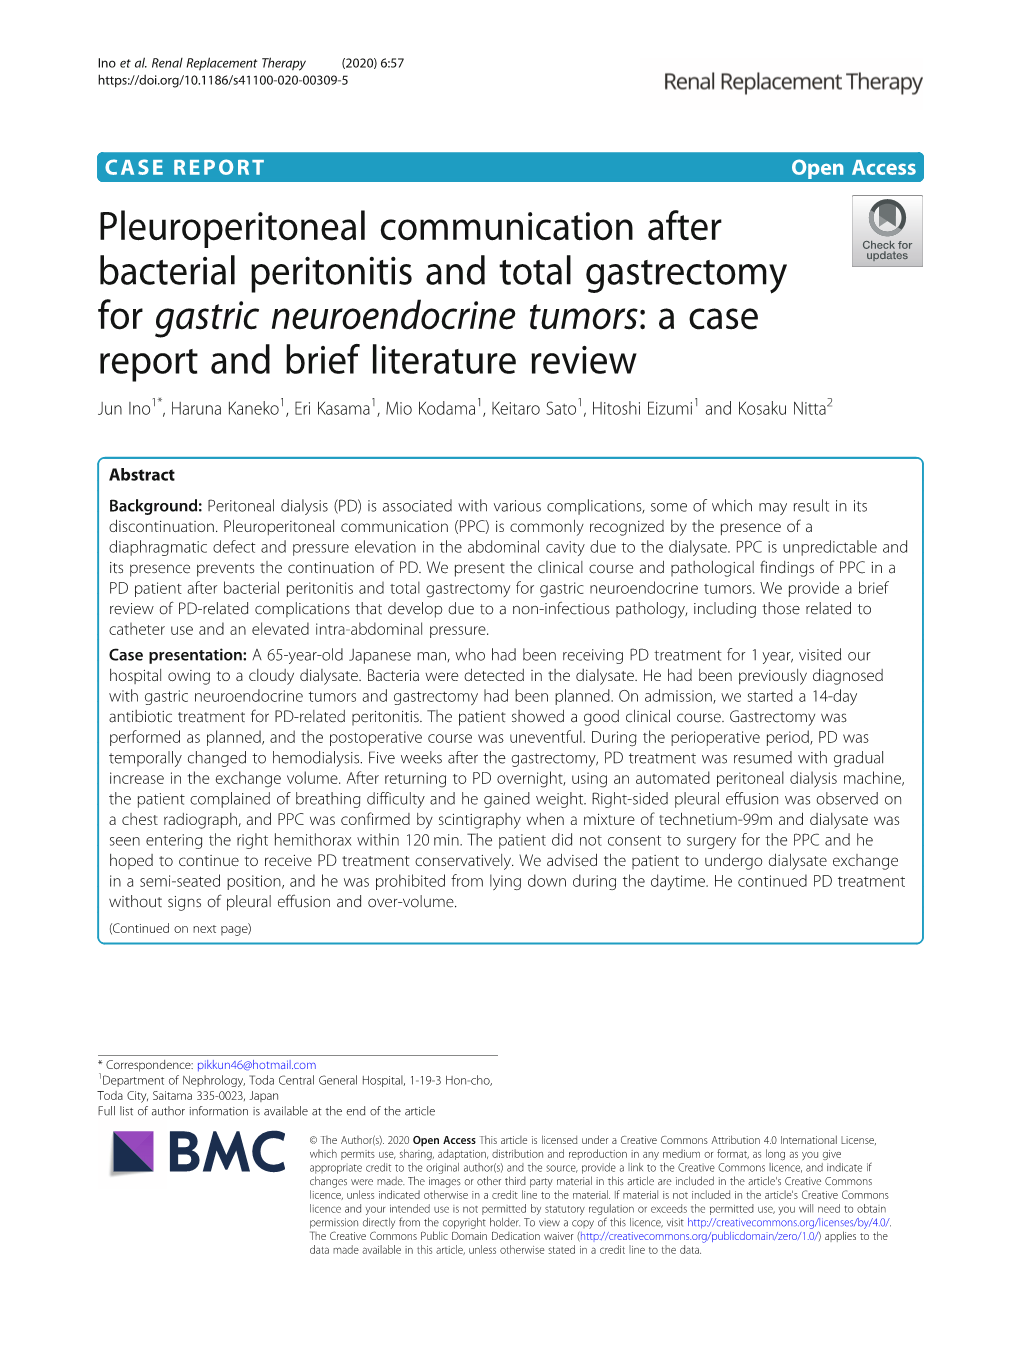 Pleuroperitoneal Communication After